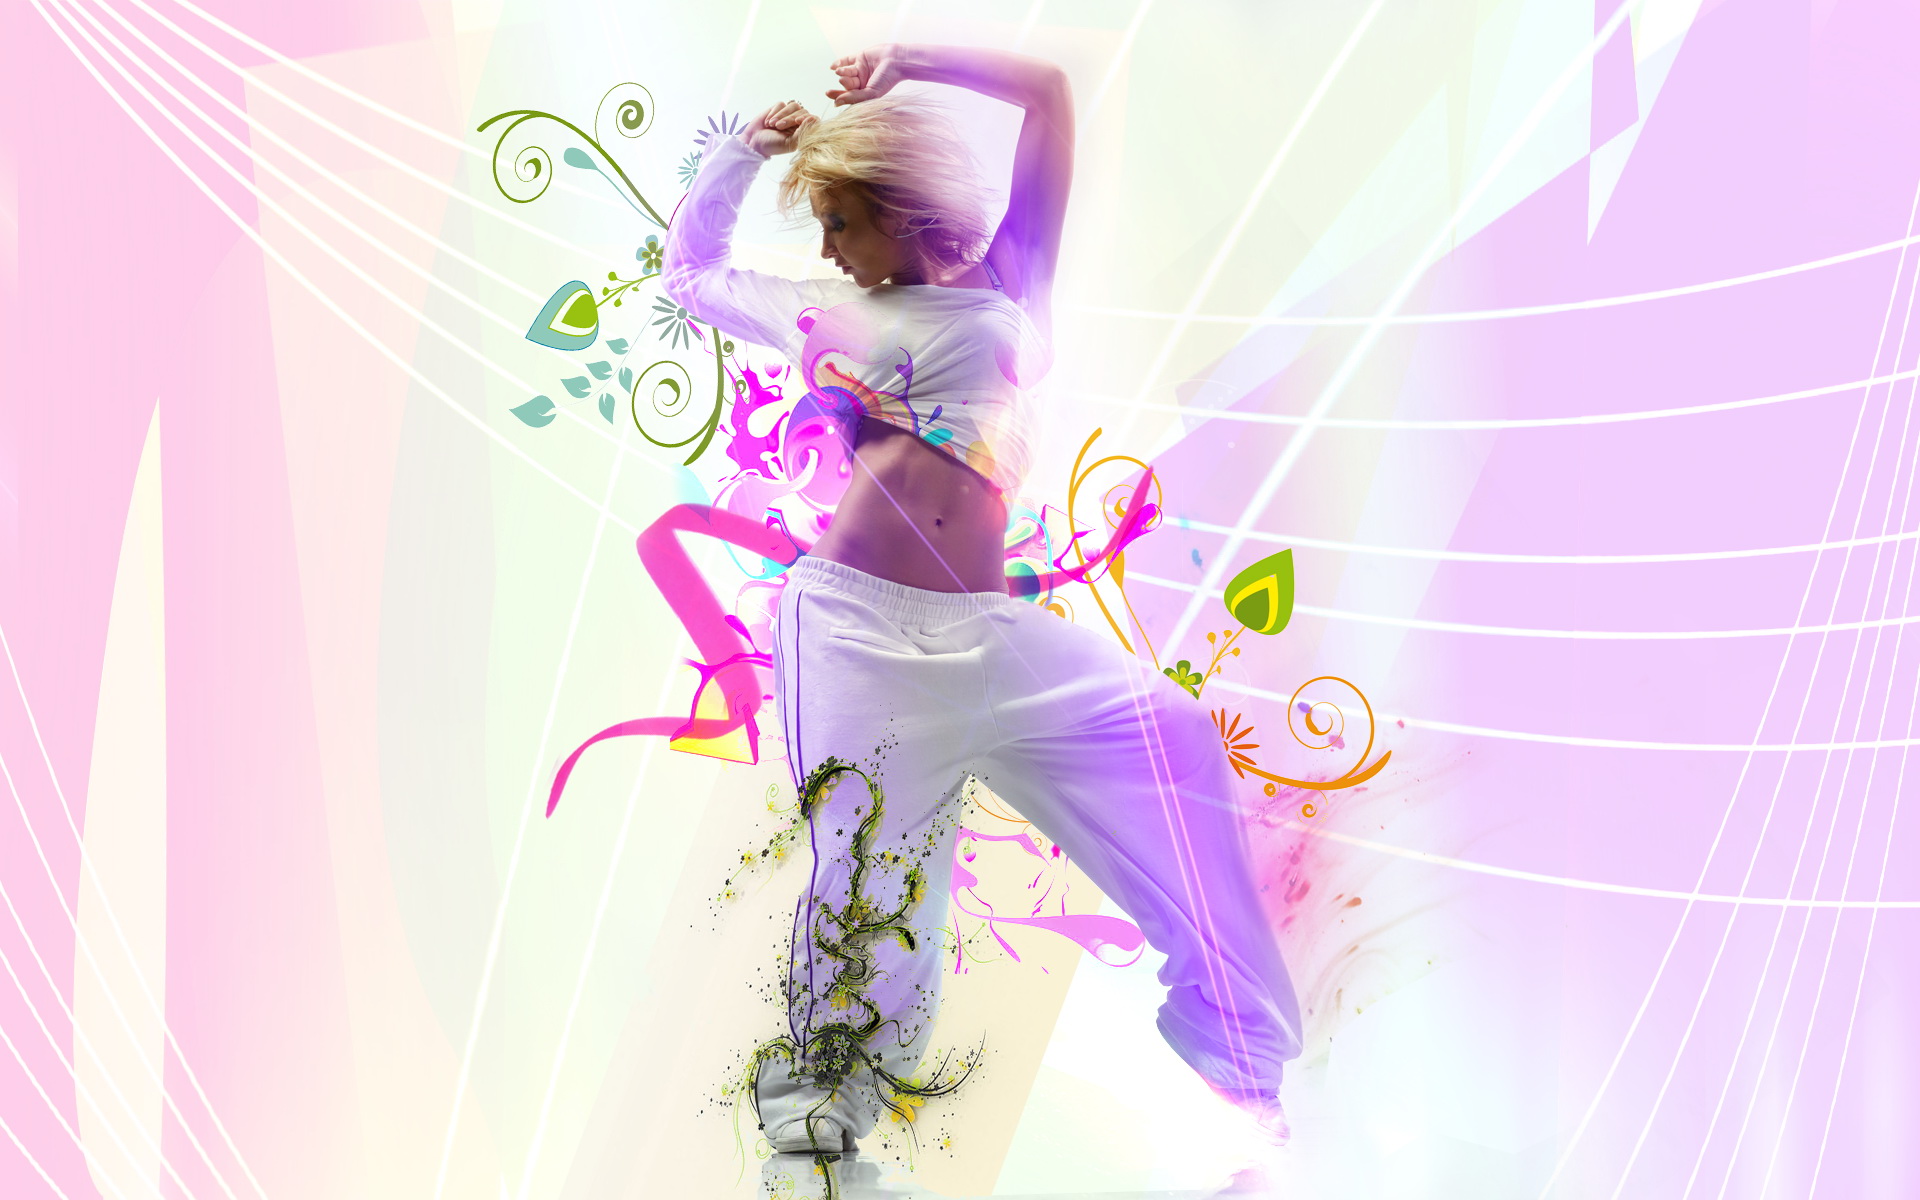 Dancing Girl by CaCaDoo on DeviantArt